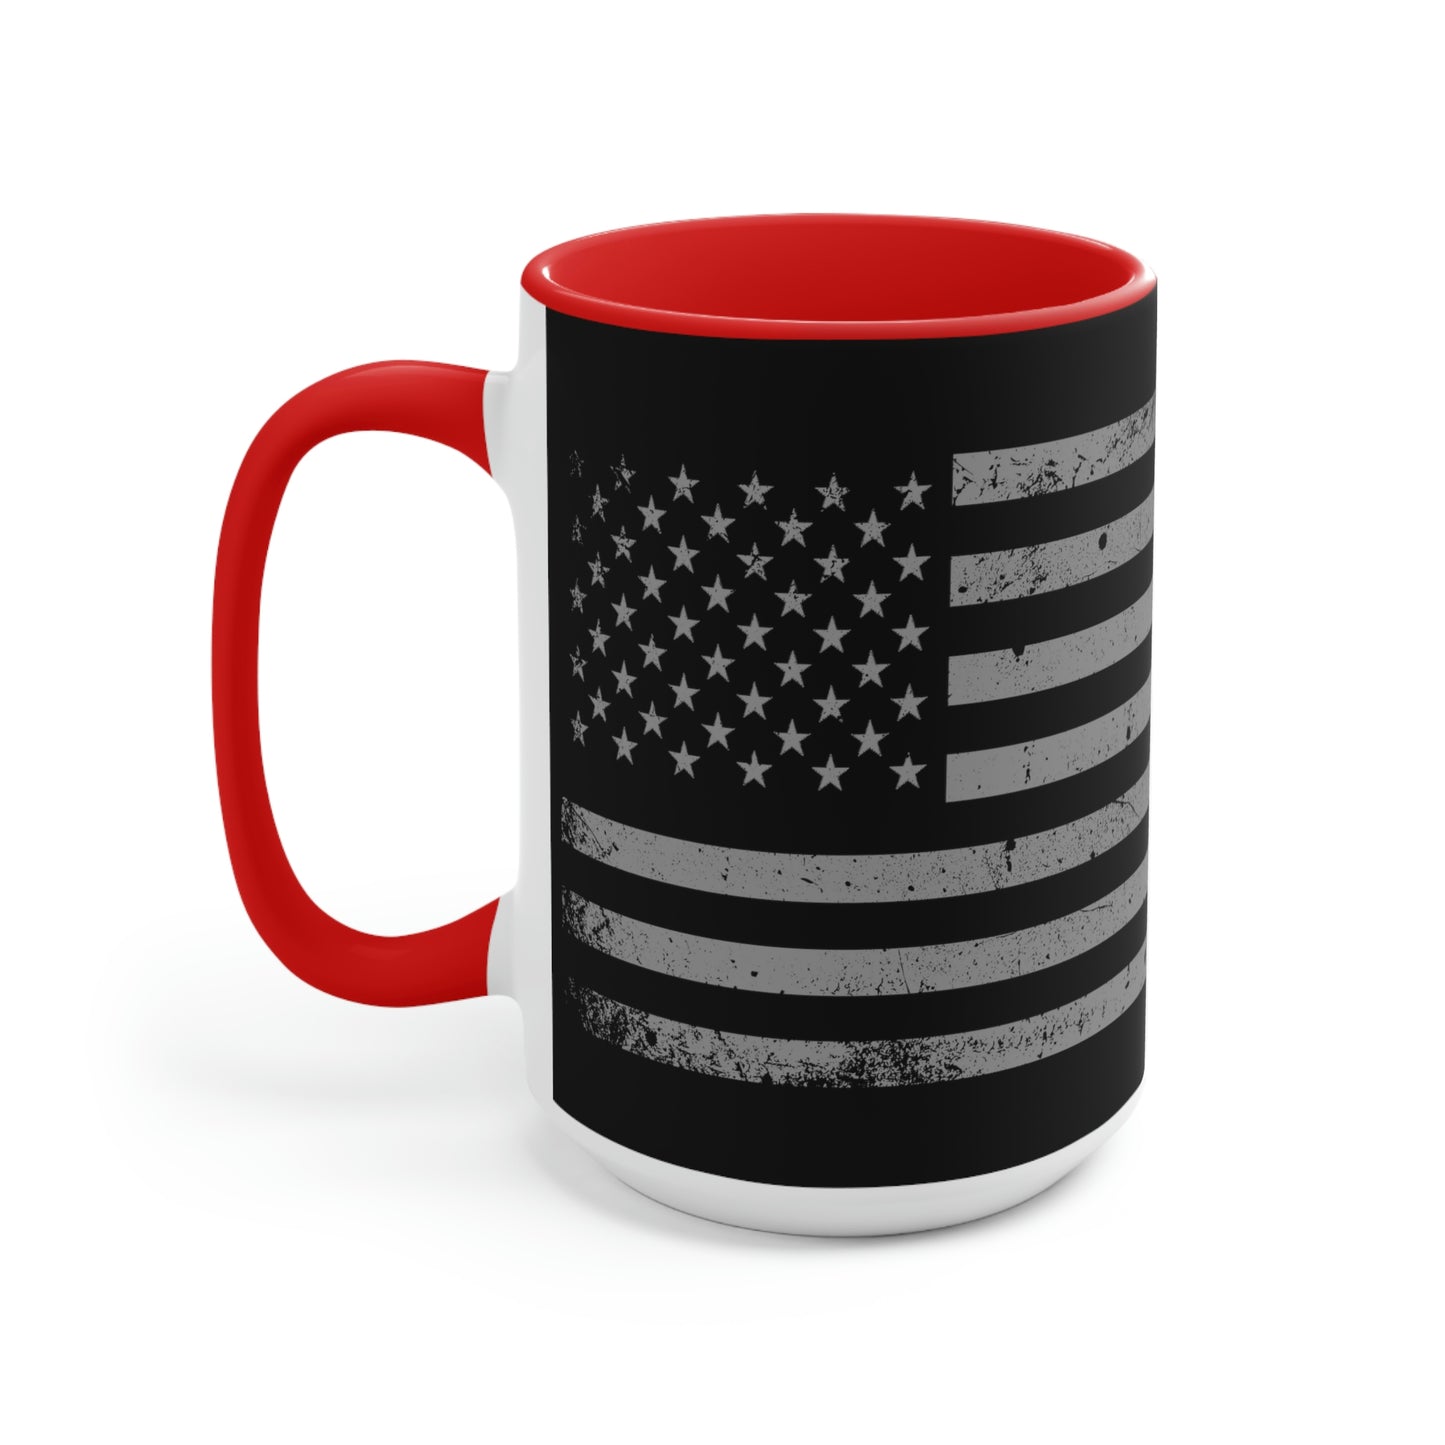 Let Freedom Ring Mug